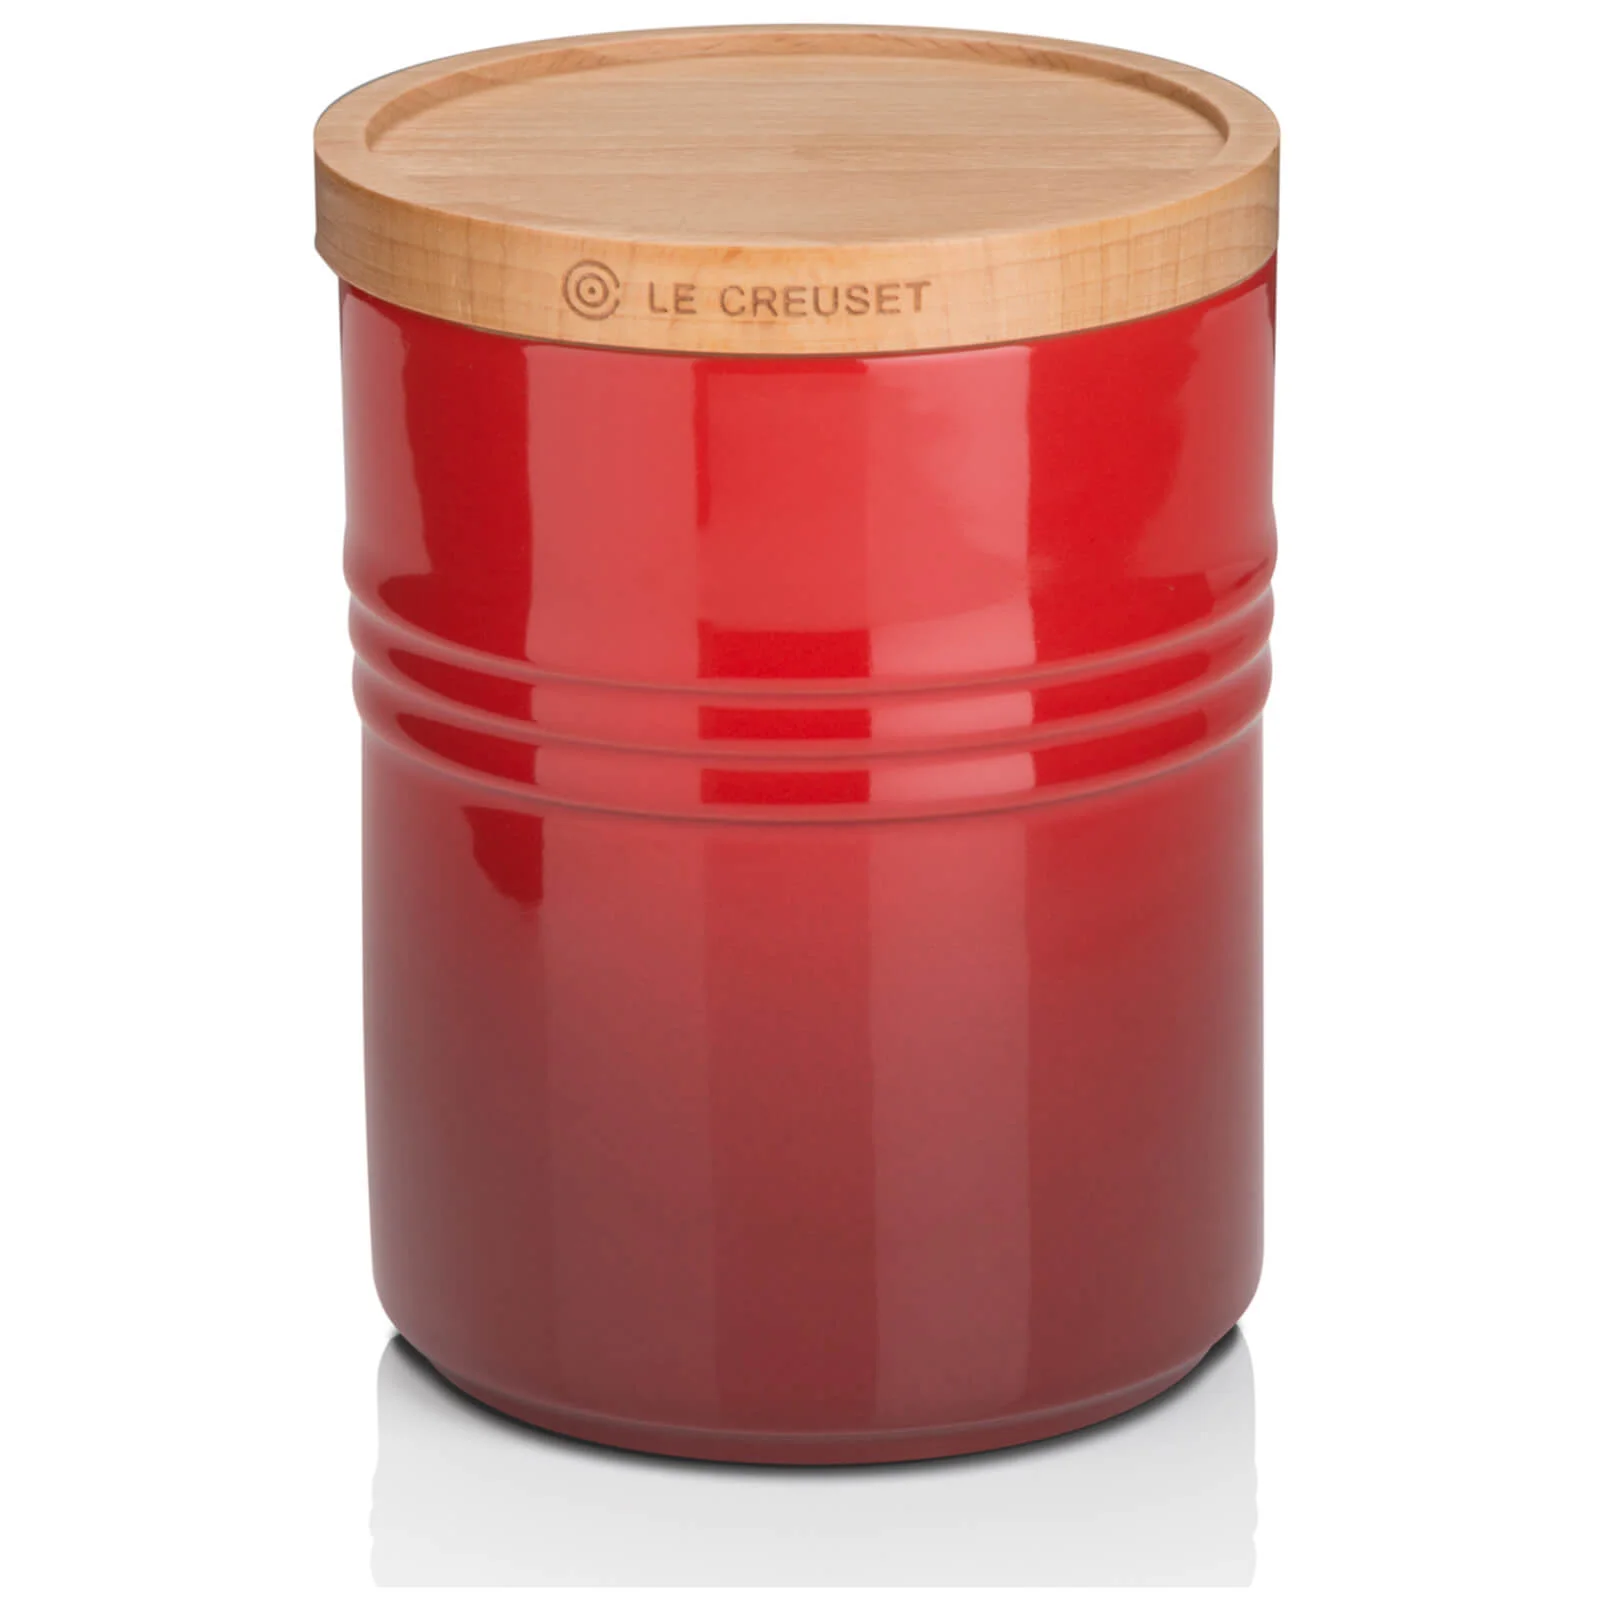 Le Creuset Stoneware Medium Storage Jar with Wooden Lid - Cerise Image 1